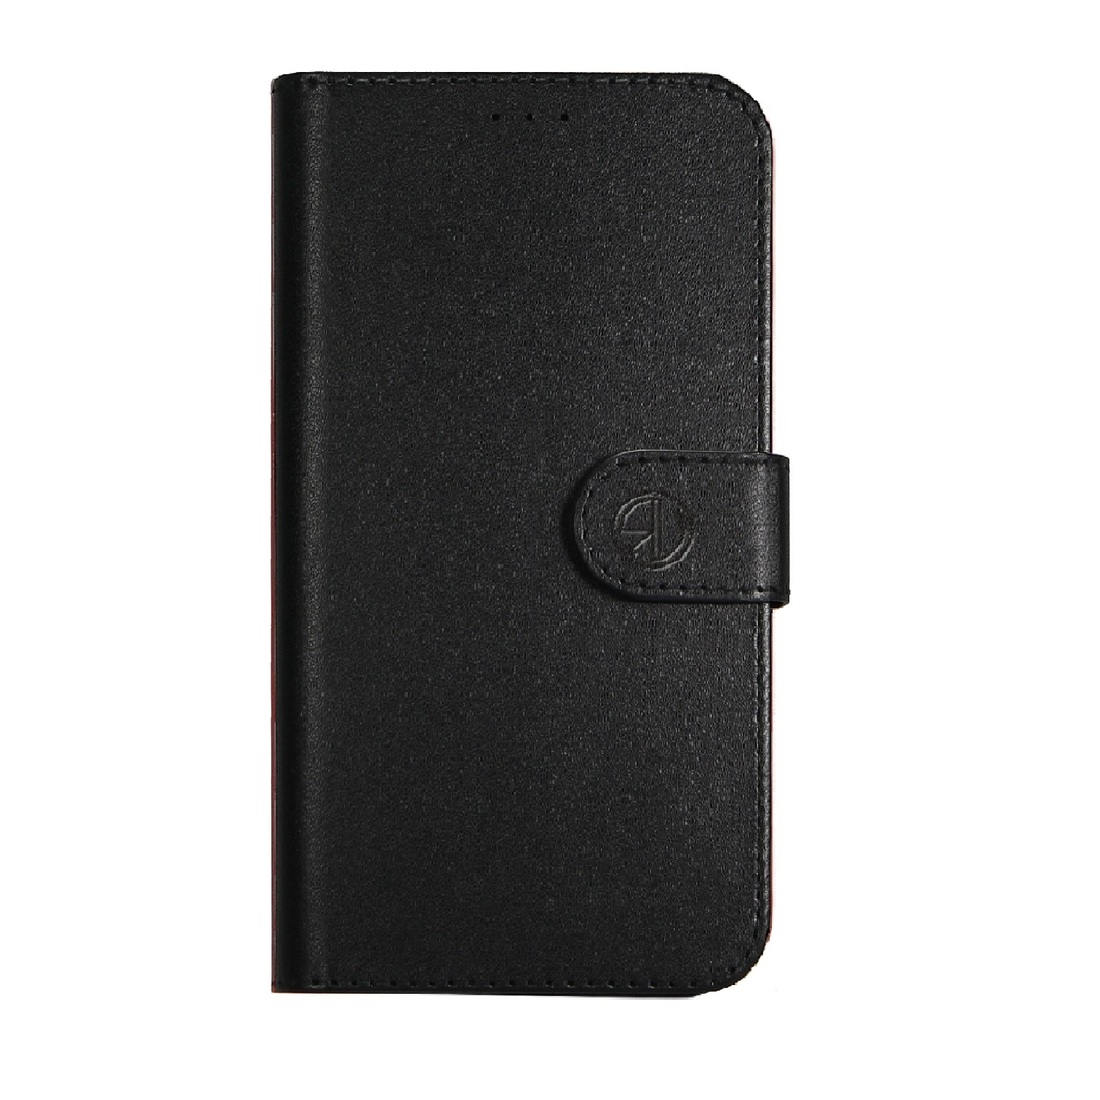 Super Wallet Case Samsung Galaxy S9 Plus black